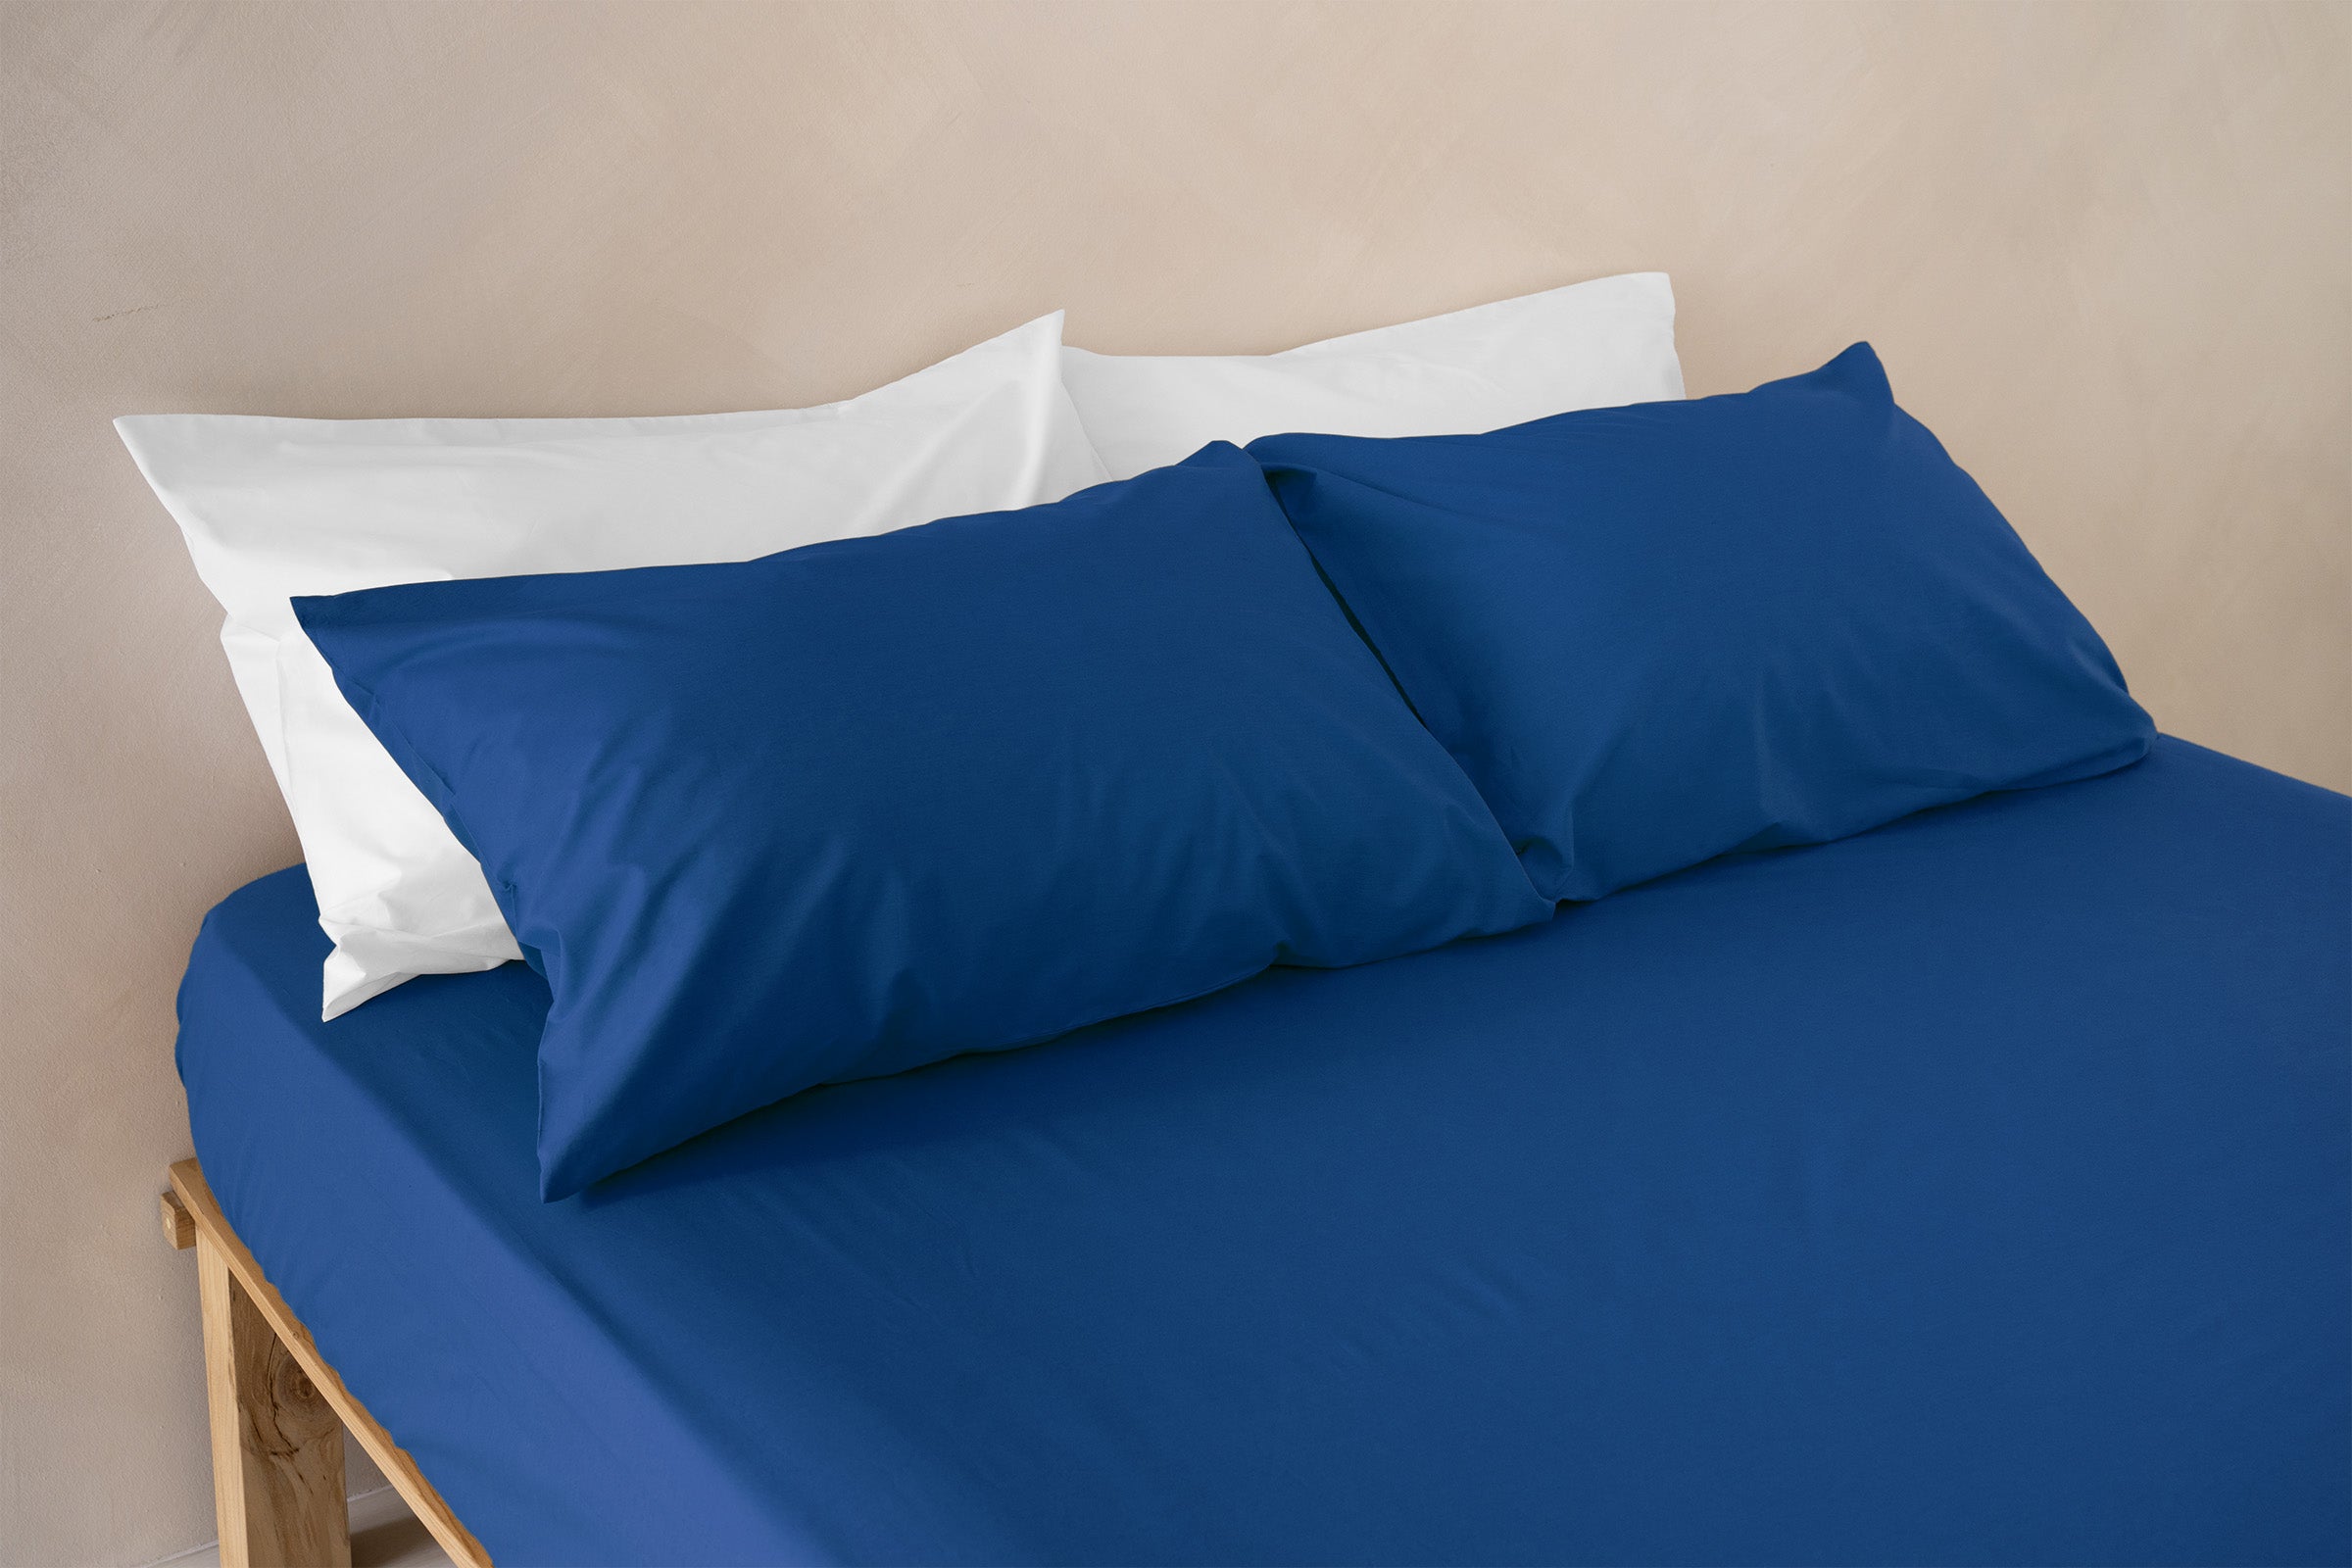 crisp-cobalt-fitted-sheet-pillowcase-pair-white-pillowcase-pair-by-sojao.jpg